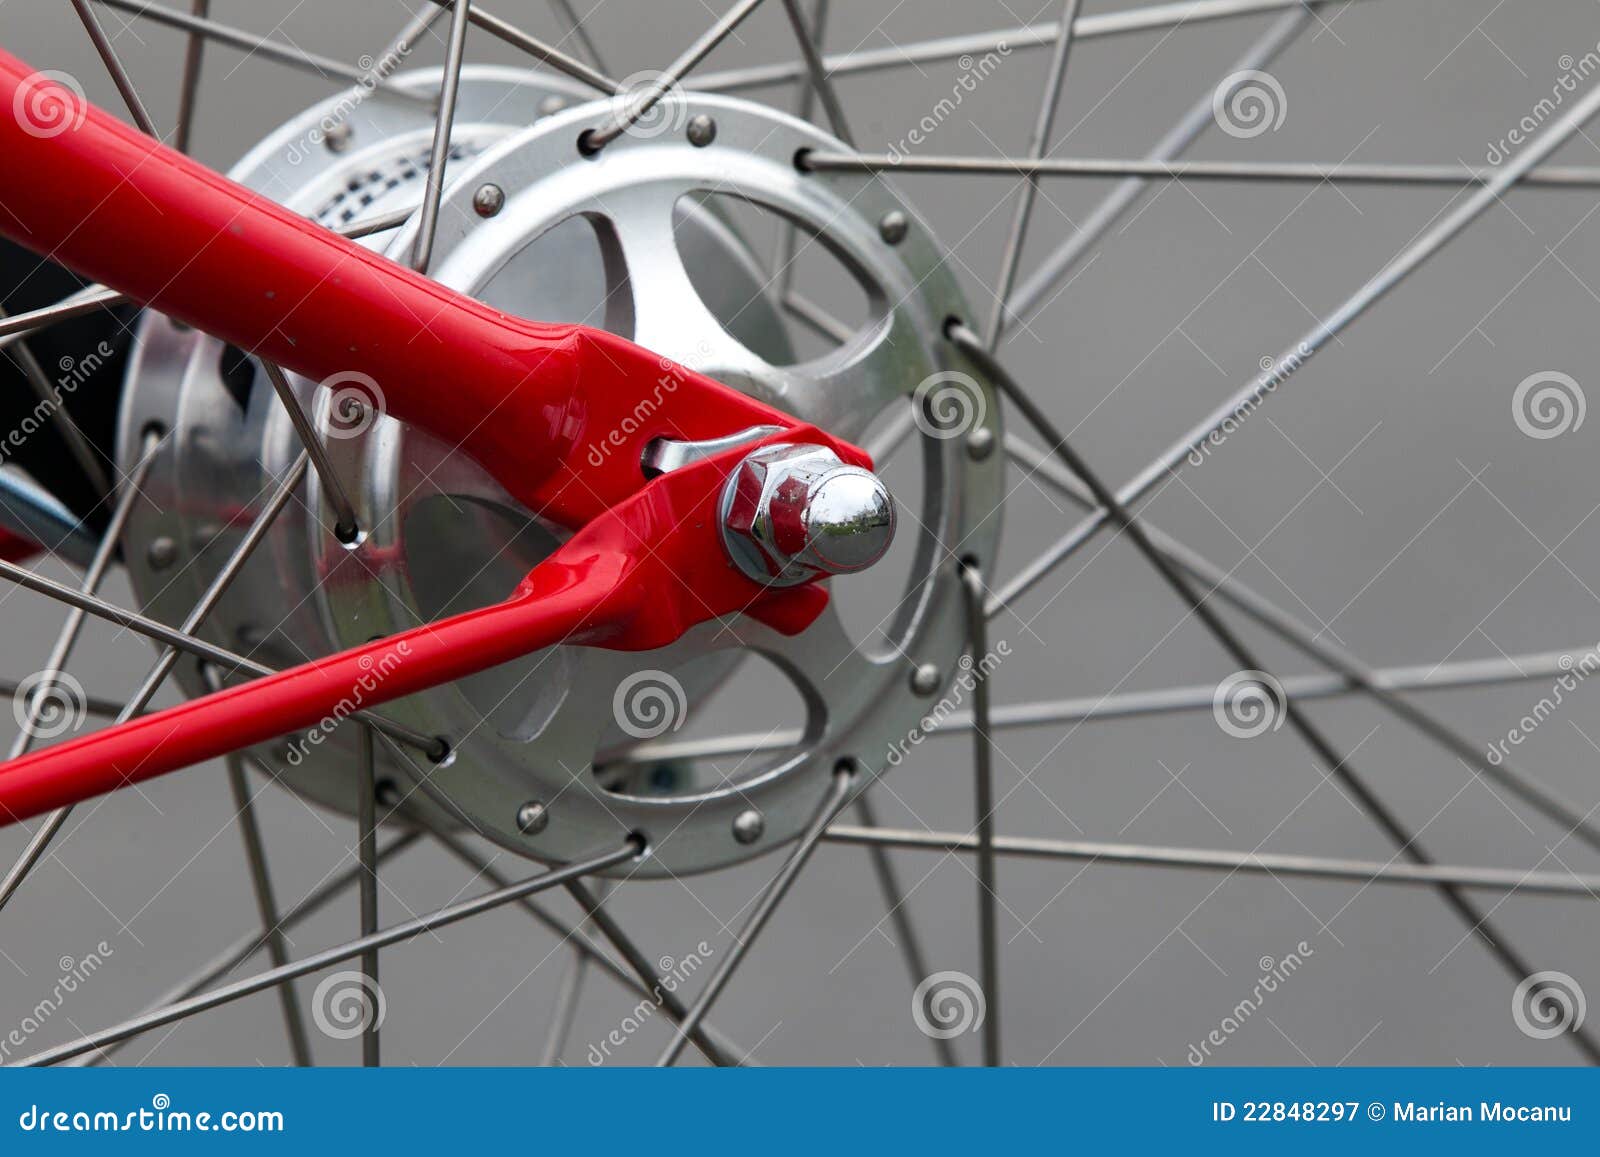 bicycle wheel hub